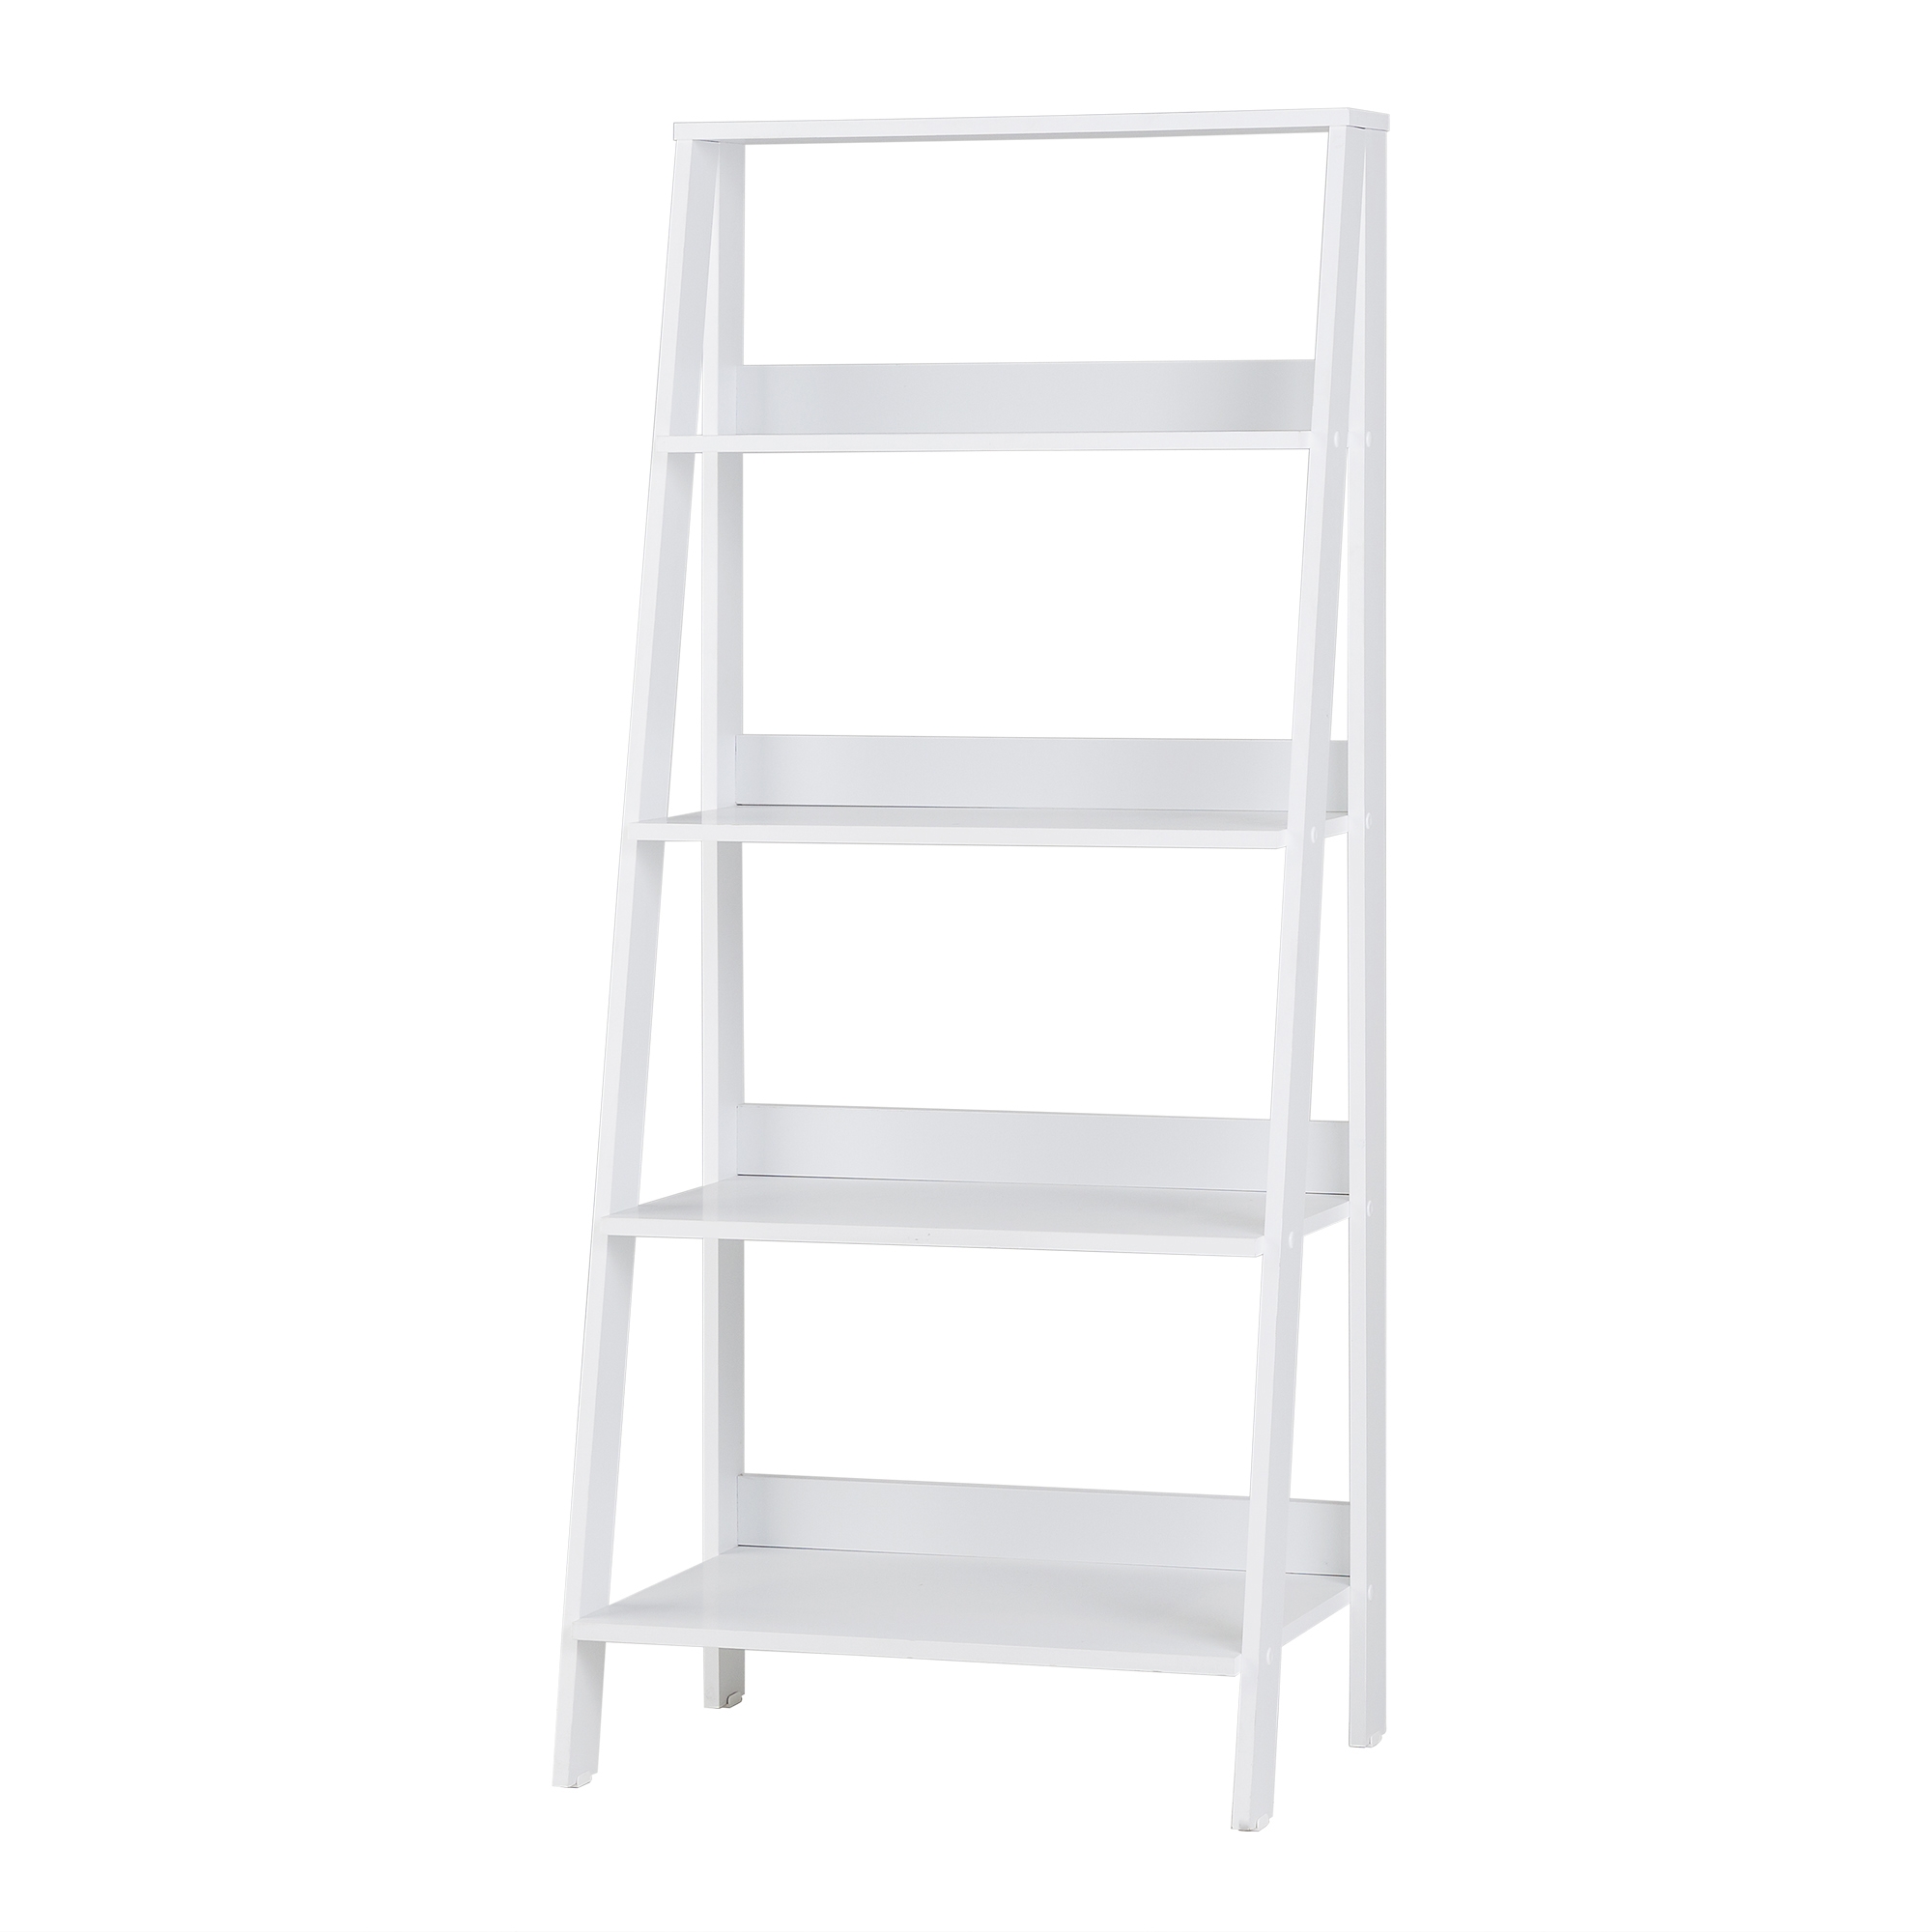 55" Modern Wood Ladder Bookshelf - White - Image 2